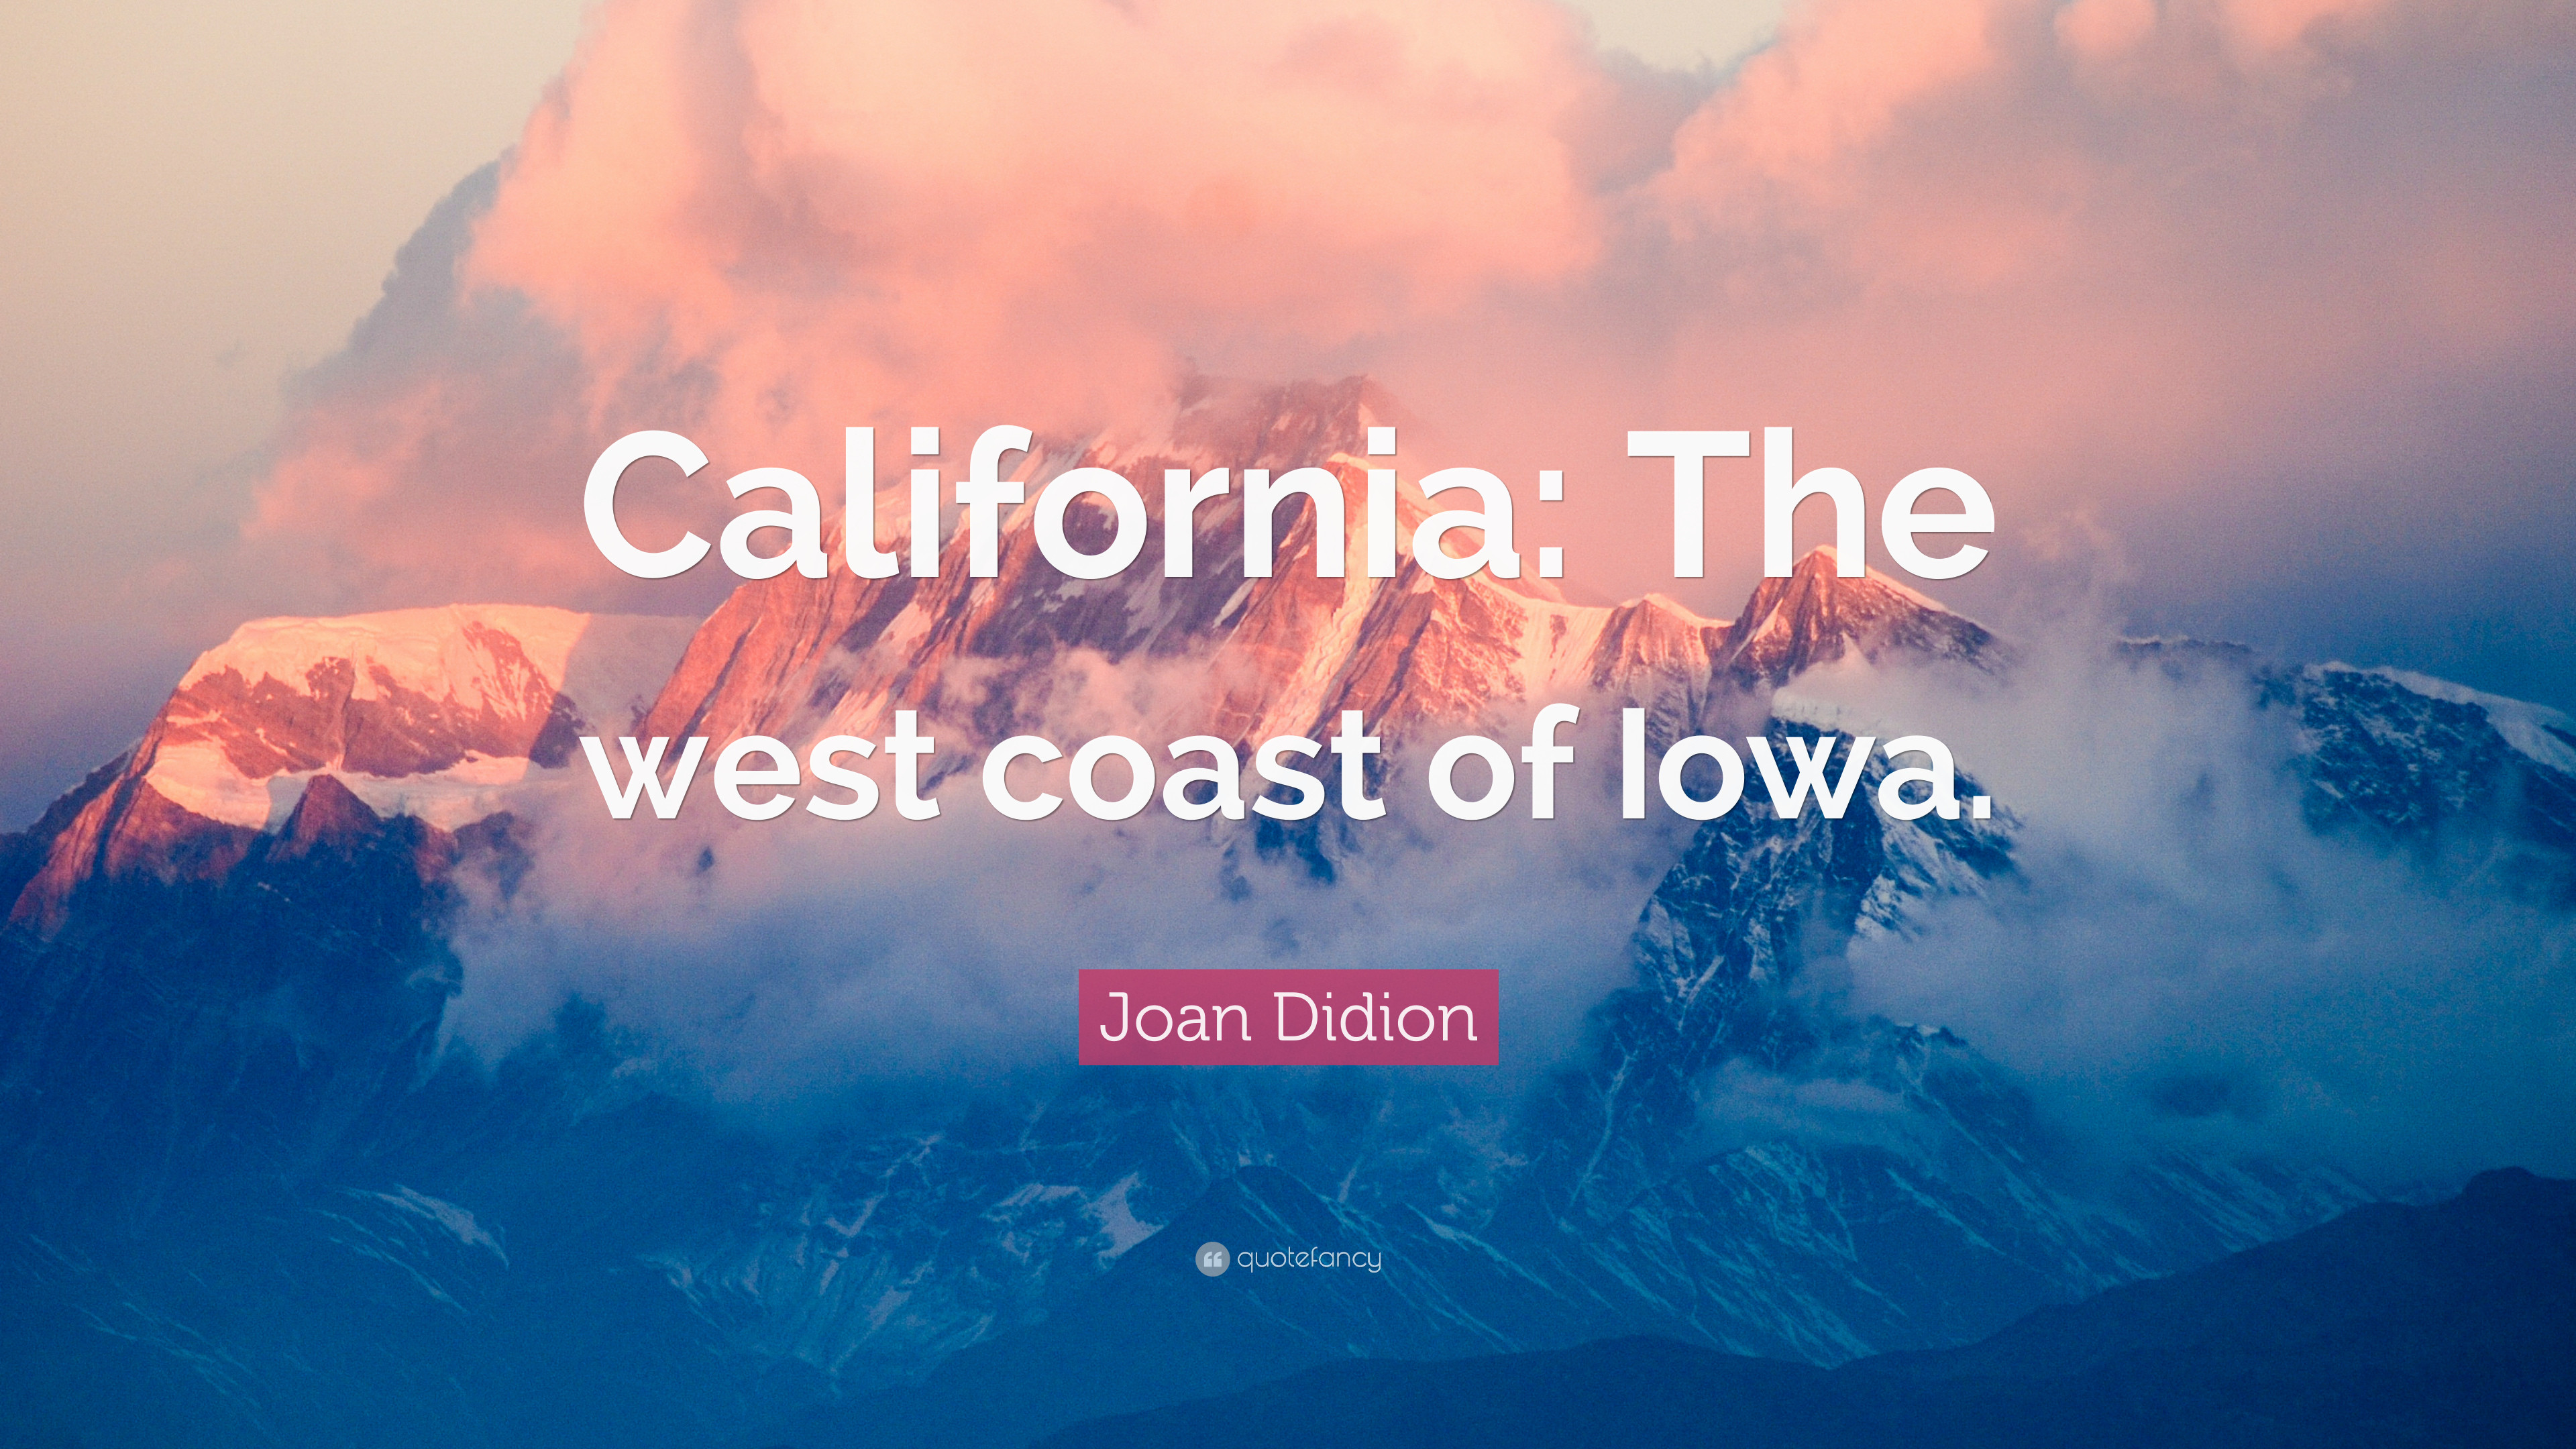 3840x2160 Joan Didion Quote: “California: The west coast of Iowa.”